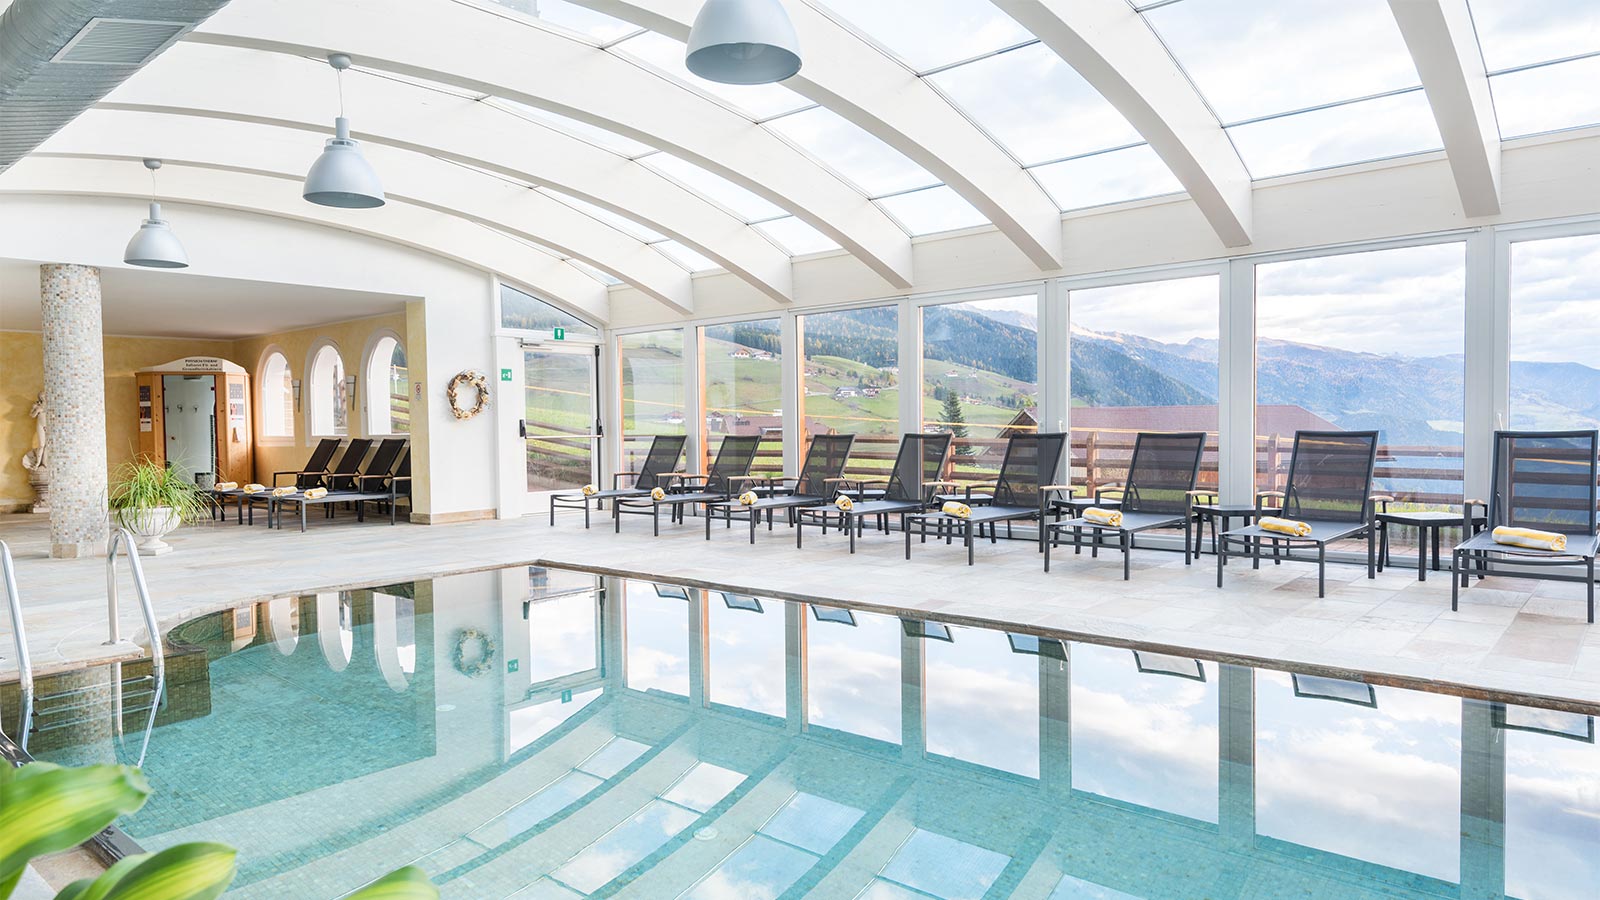 the inside pool of Hotel Alpenfrieden